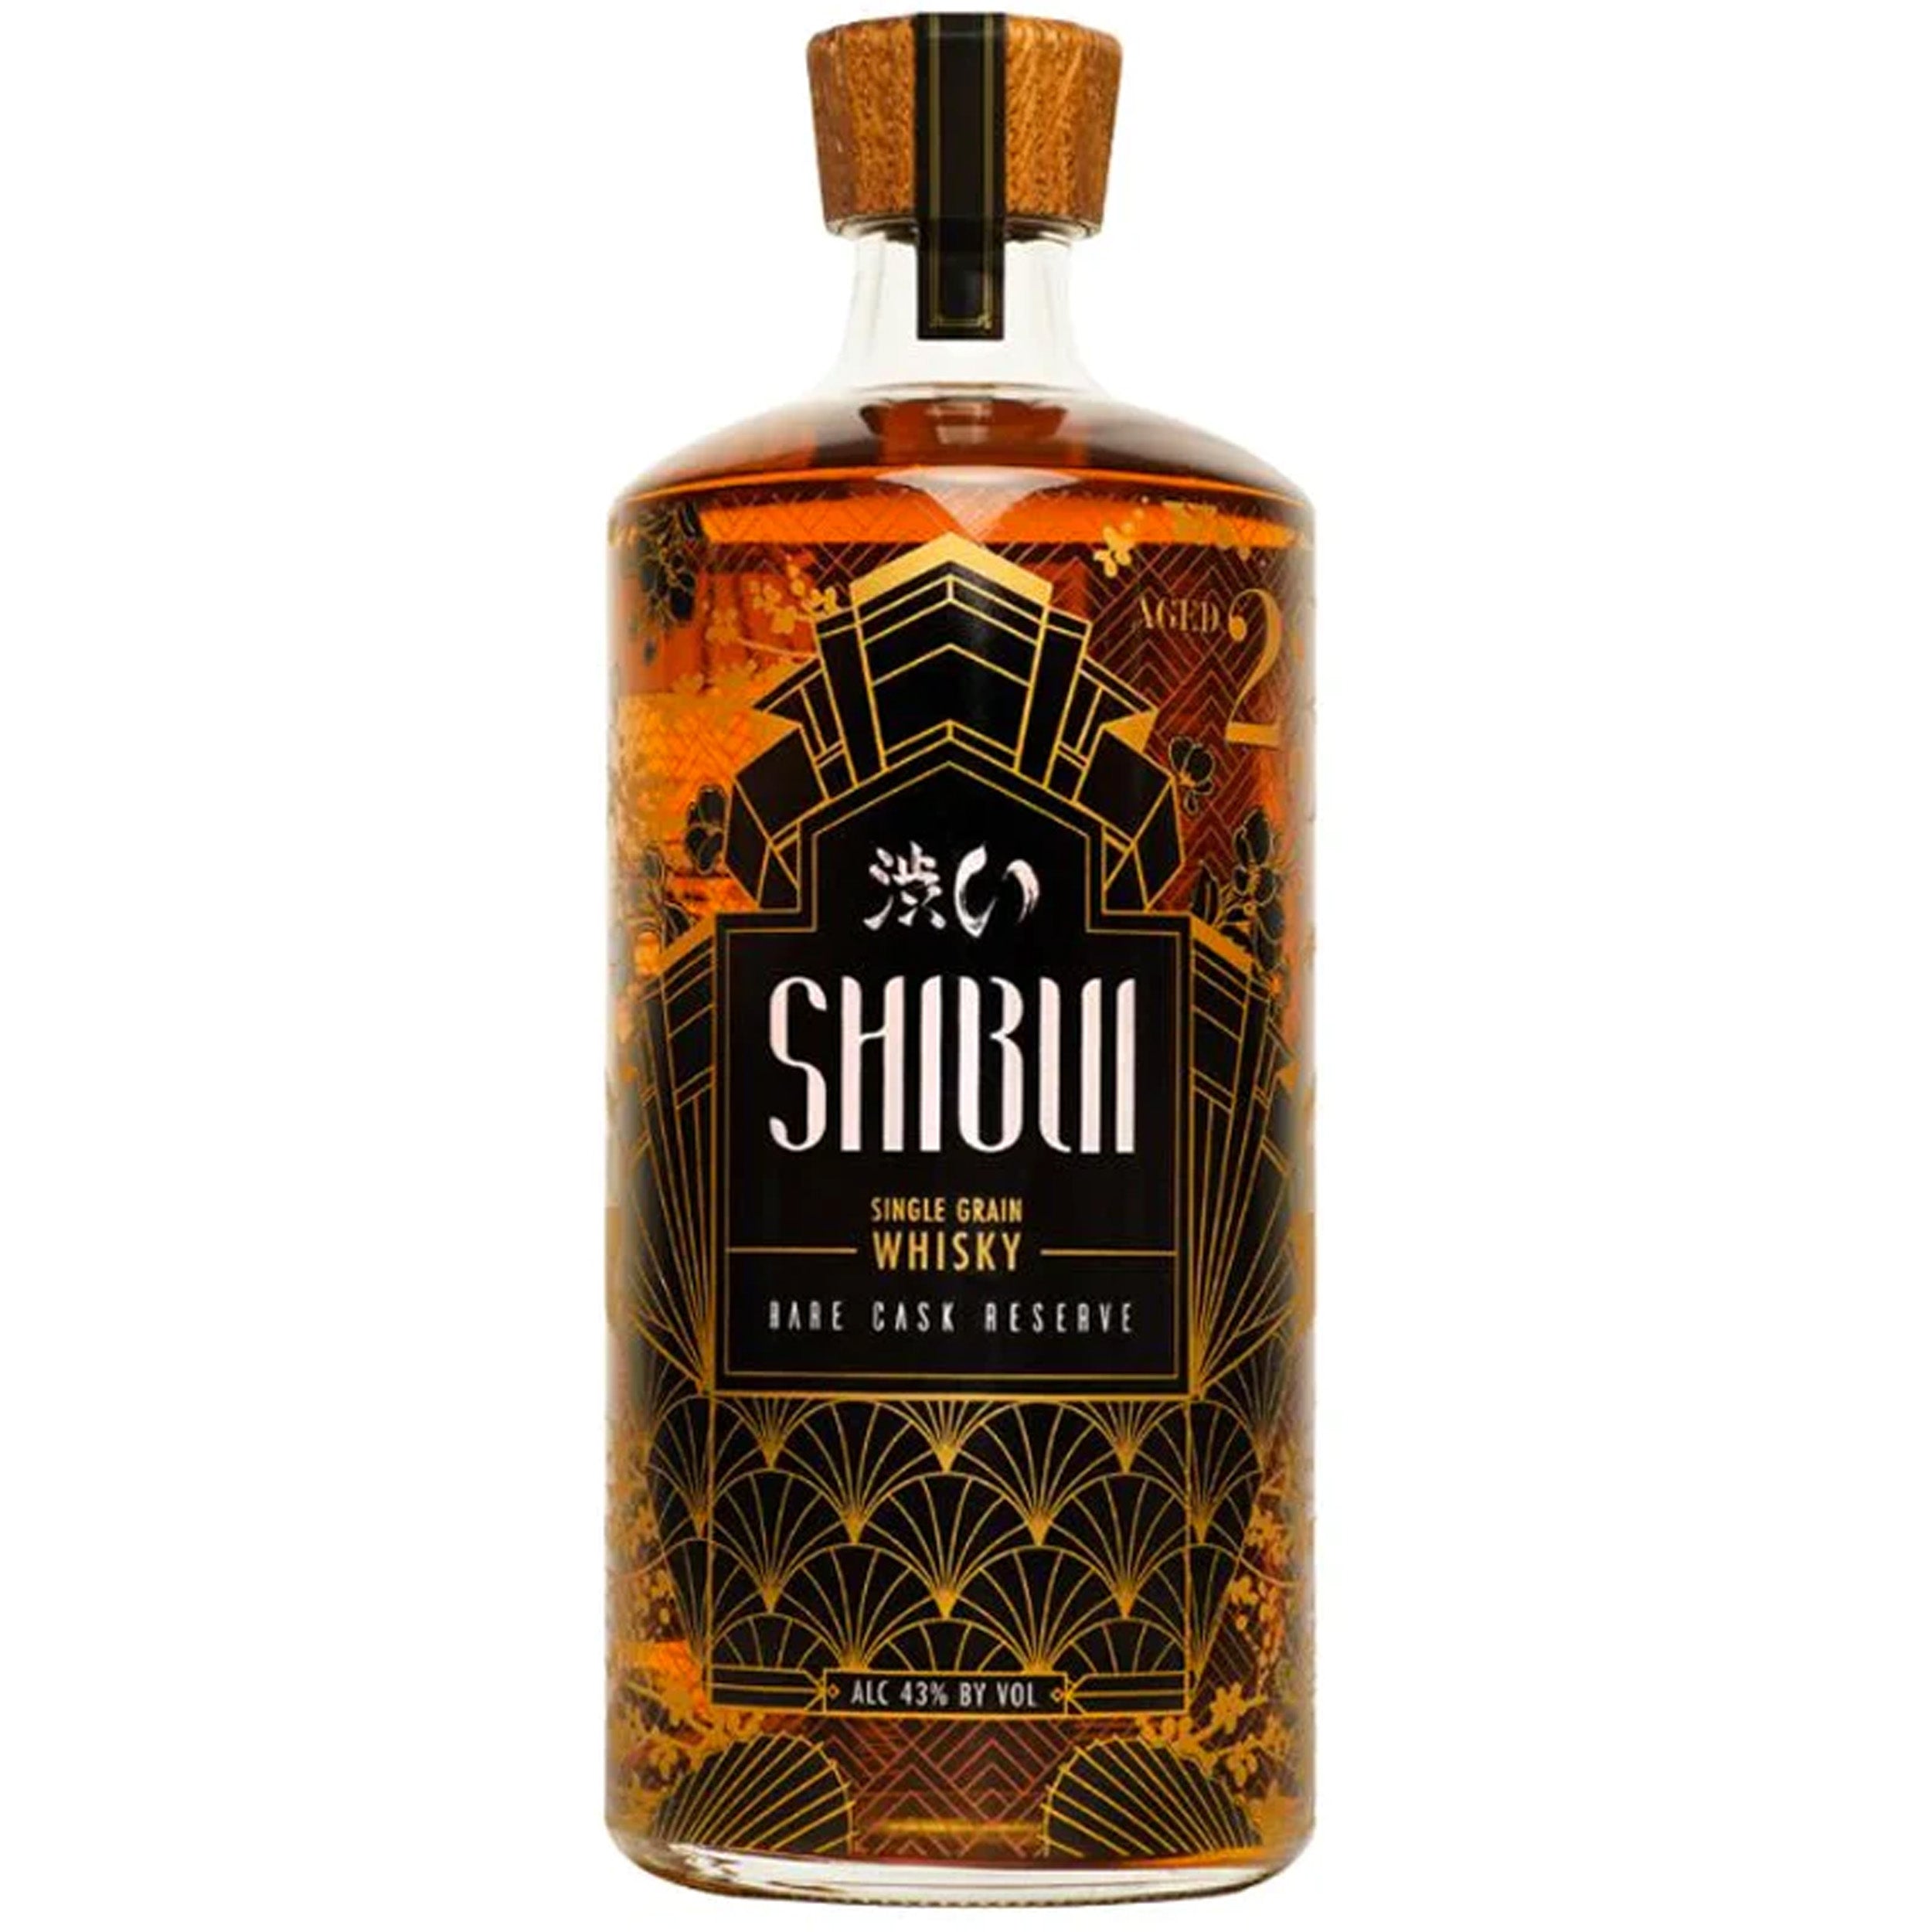 Shibui 23 Year Rare Cask Reserve Single Grain Whisky